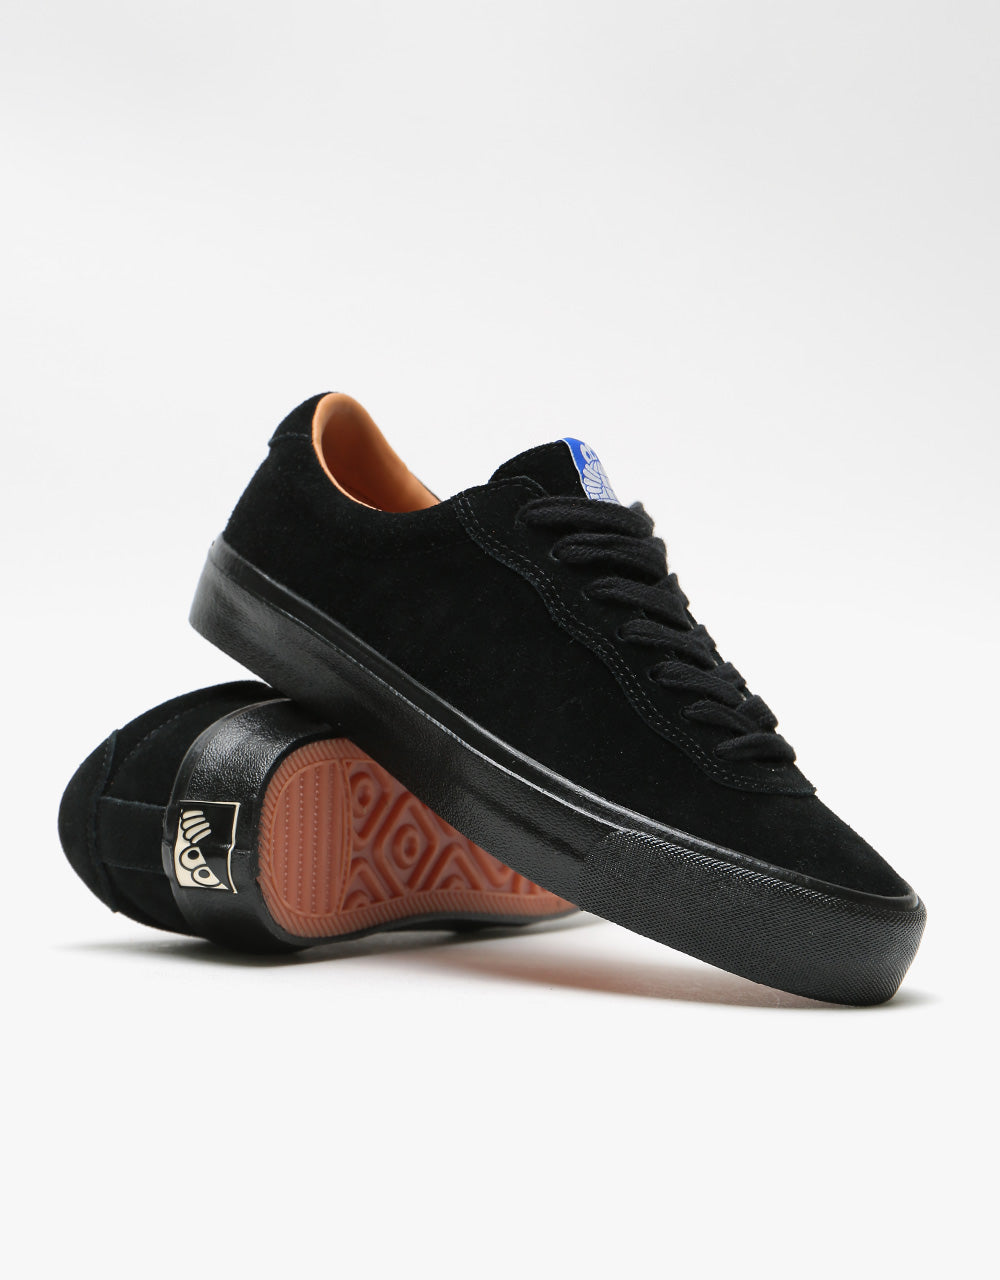 Last Resort AB VM001 Suede Lo Skate Shoes - Black/Black